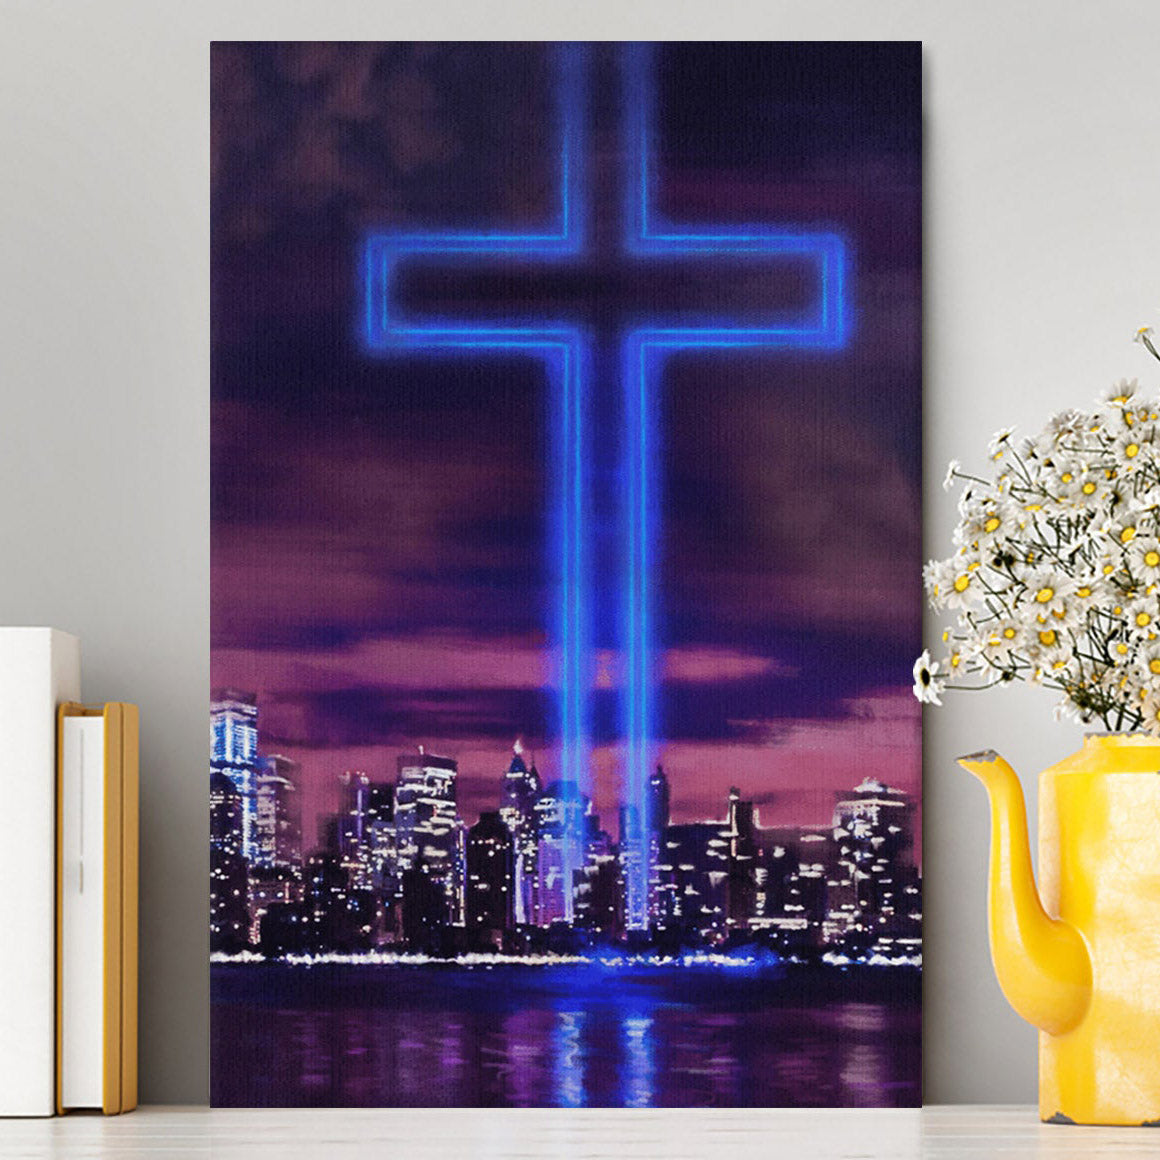 Jesus Cross World Trade Center Building Canvas Prints - Jesus Christ Canvas Art - Christian Wall Decor